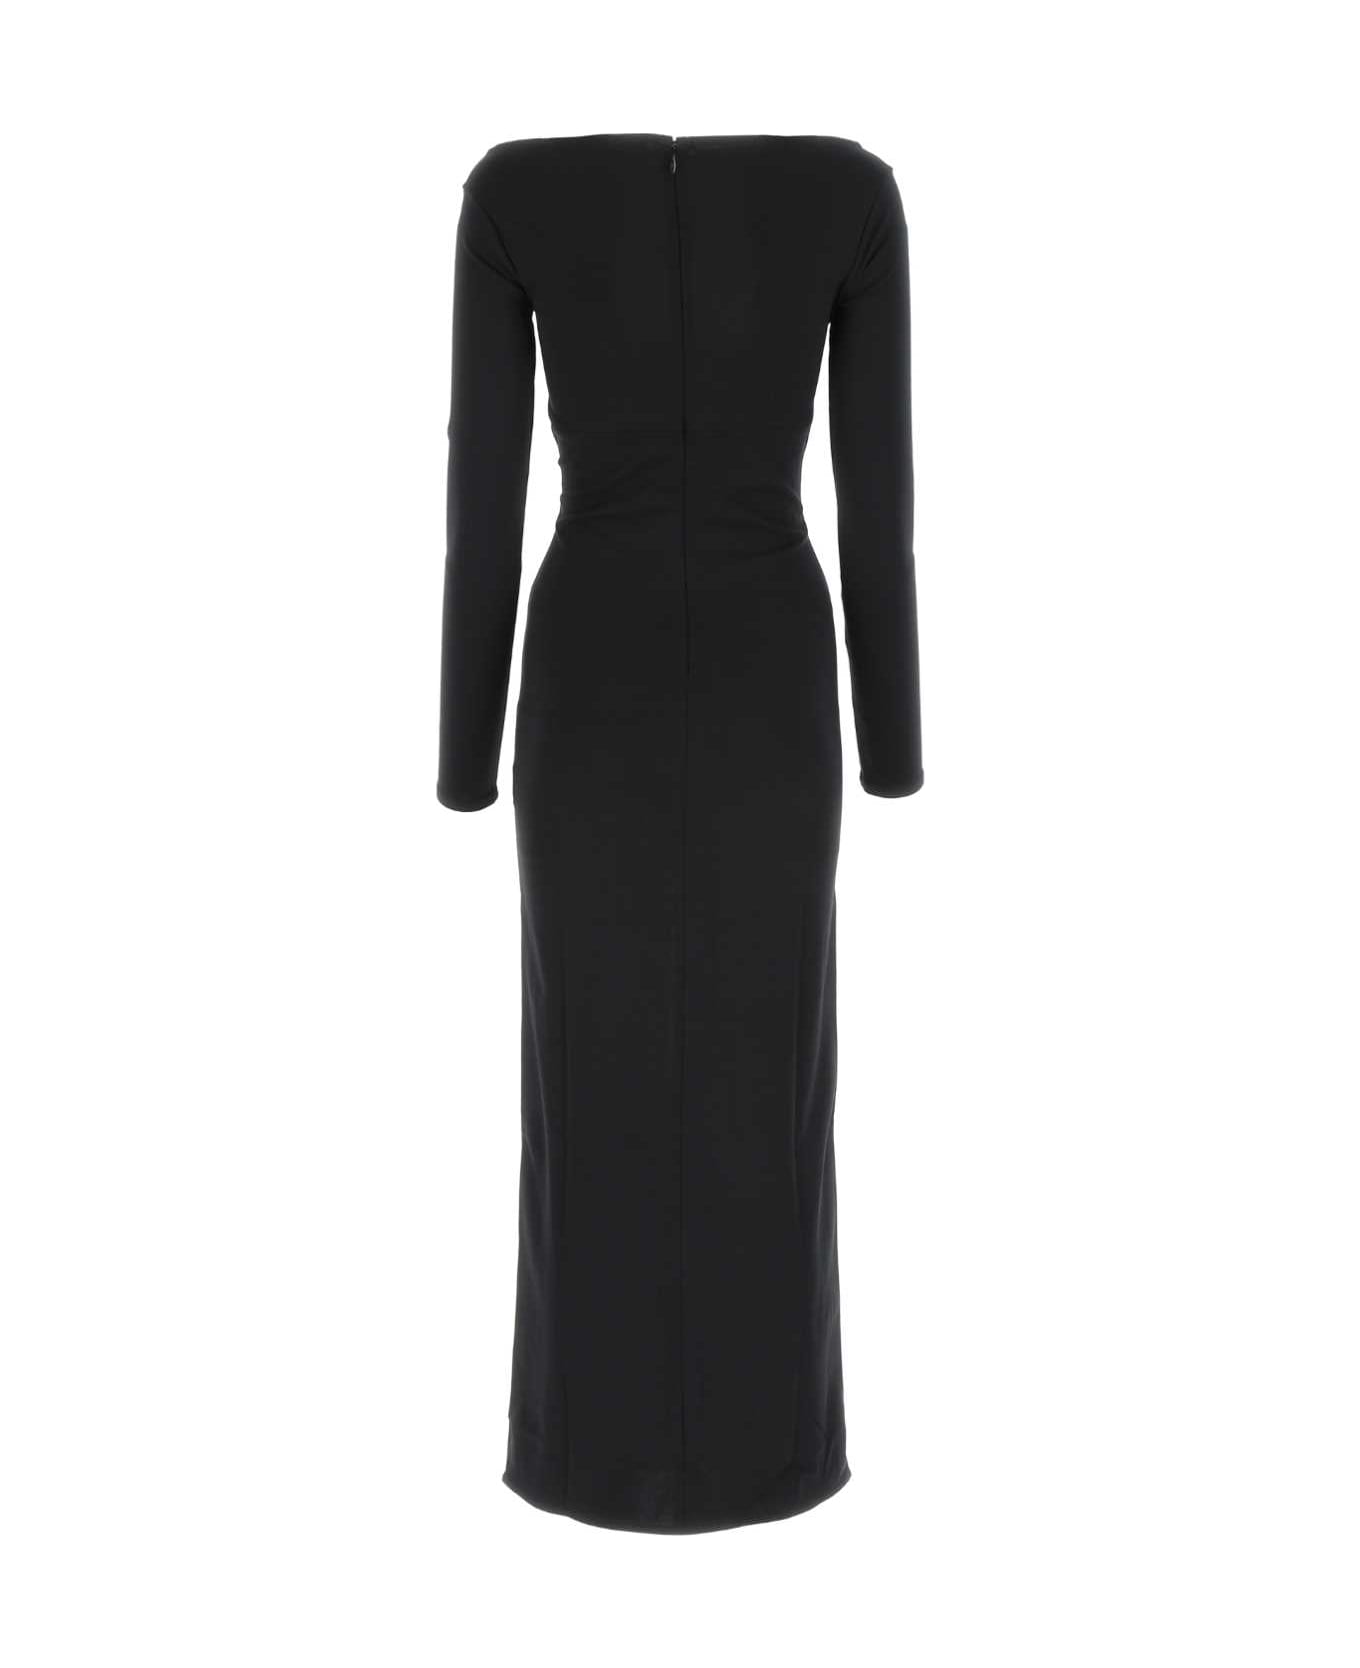 Courrèges Black Stretch Viscose Blend Dress - 9999